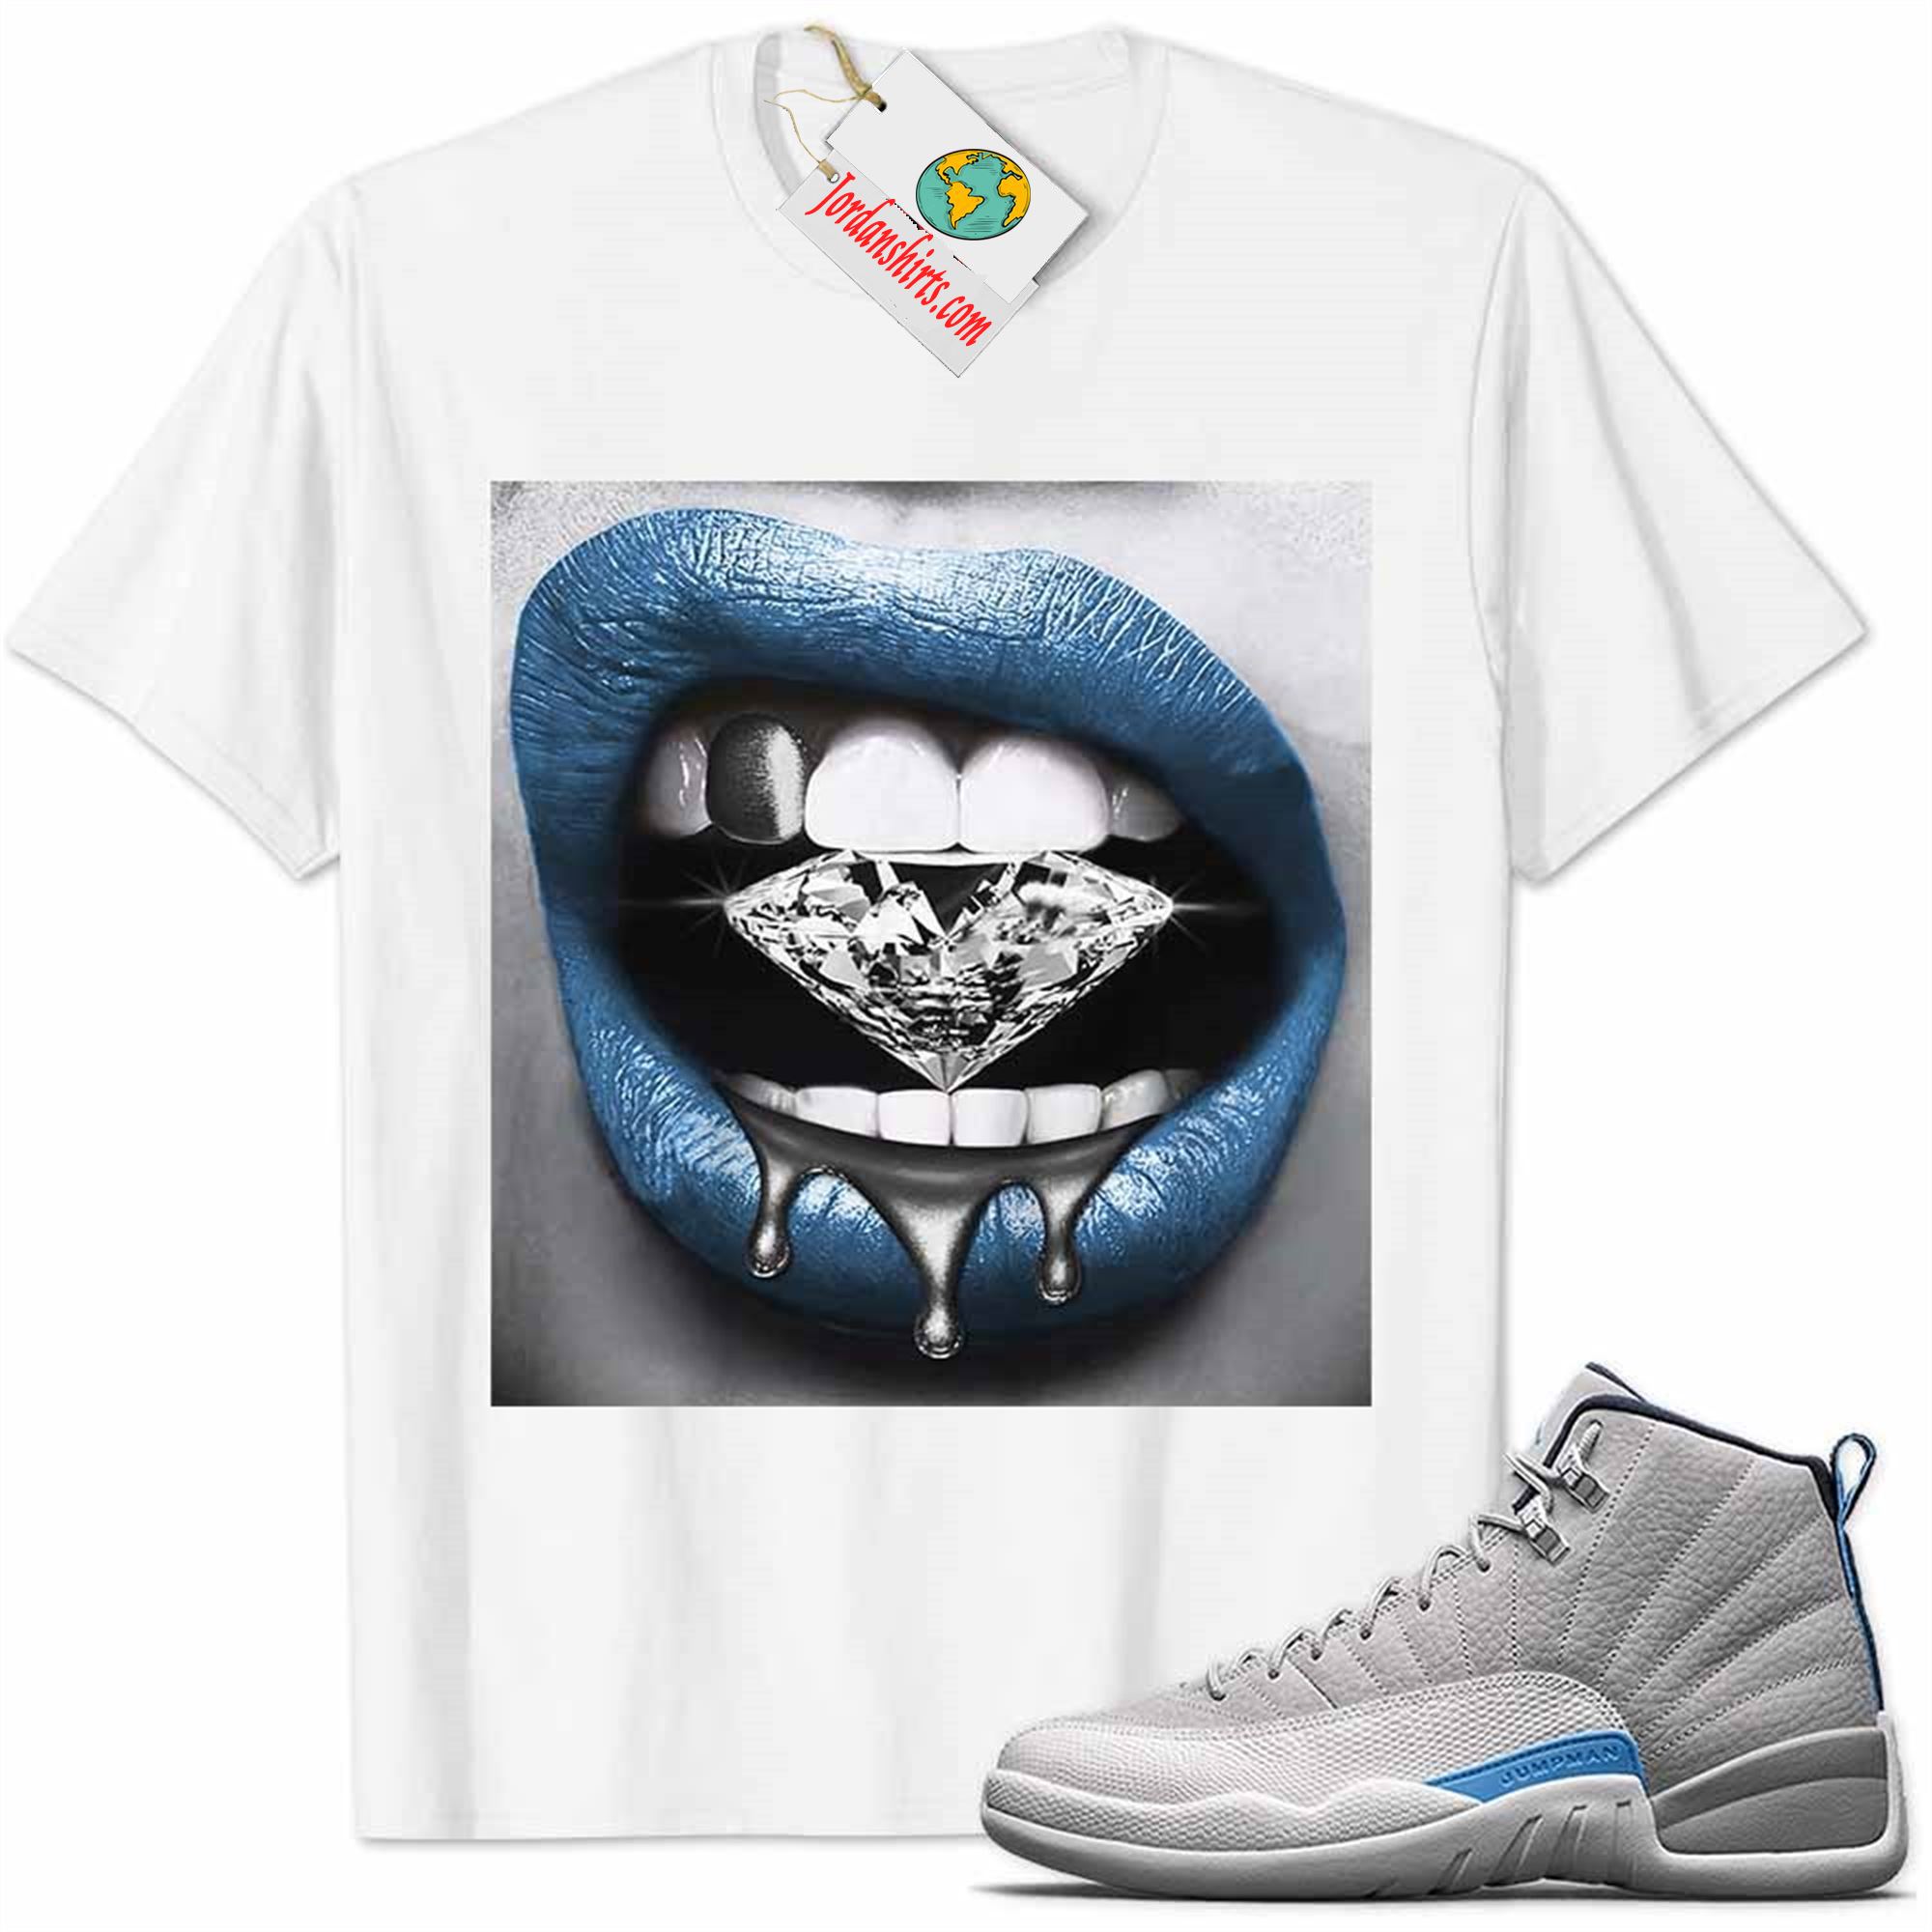 Jordan 12 Shirt, Jordan 12 Wolf Grey Shirt Sexy Lip Bite Diamond Dripping White Plus Size Up To 5xl